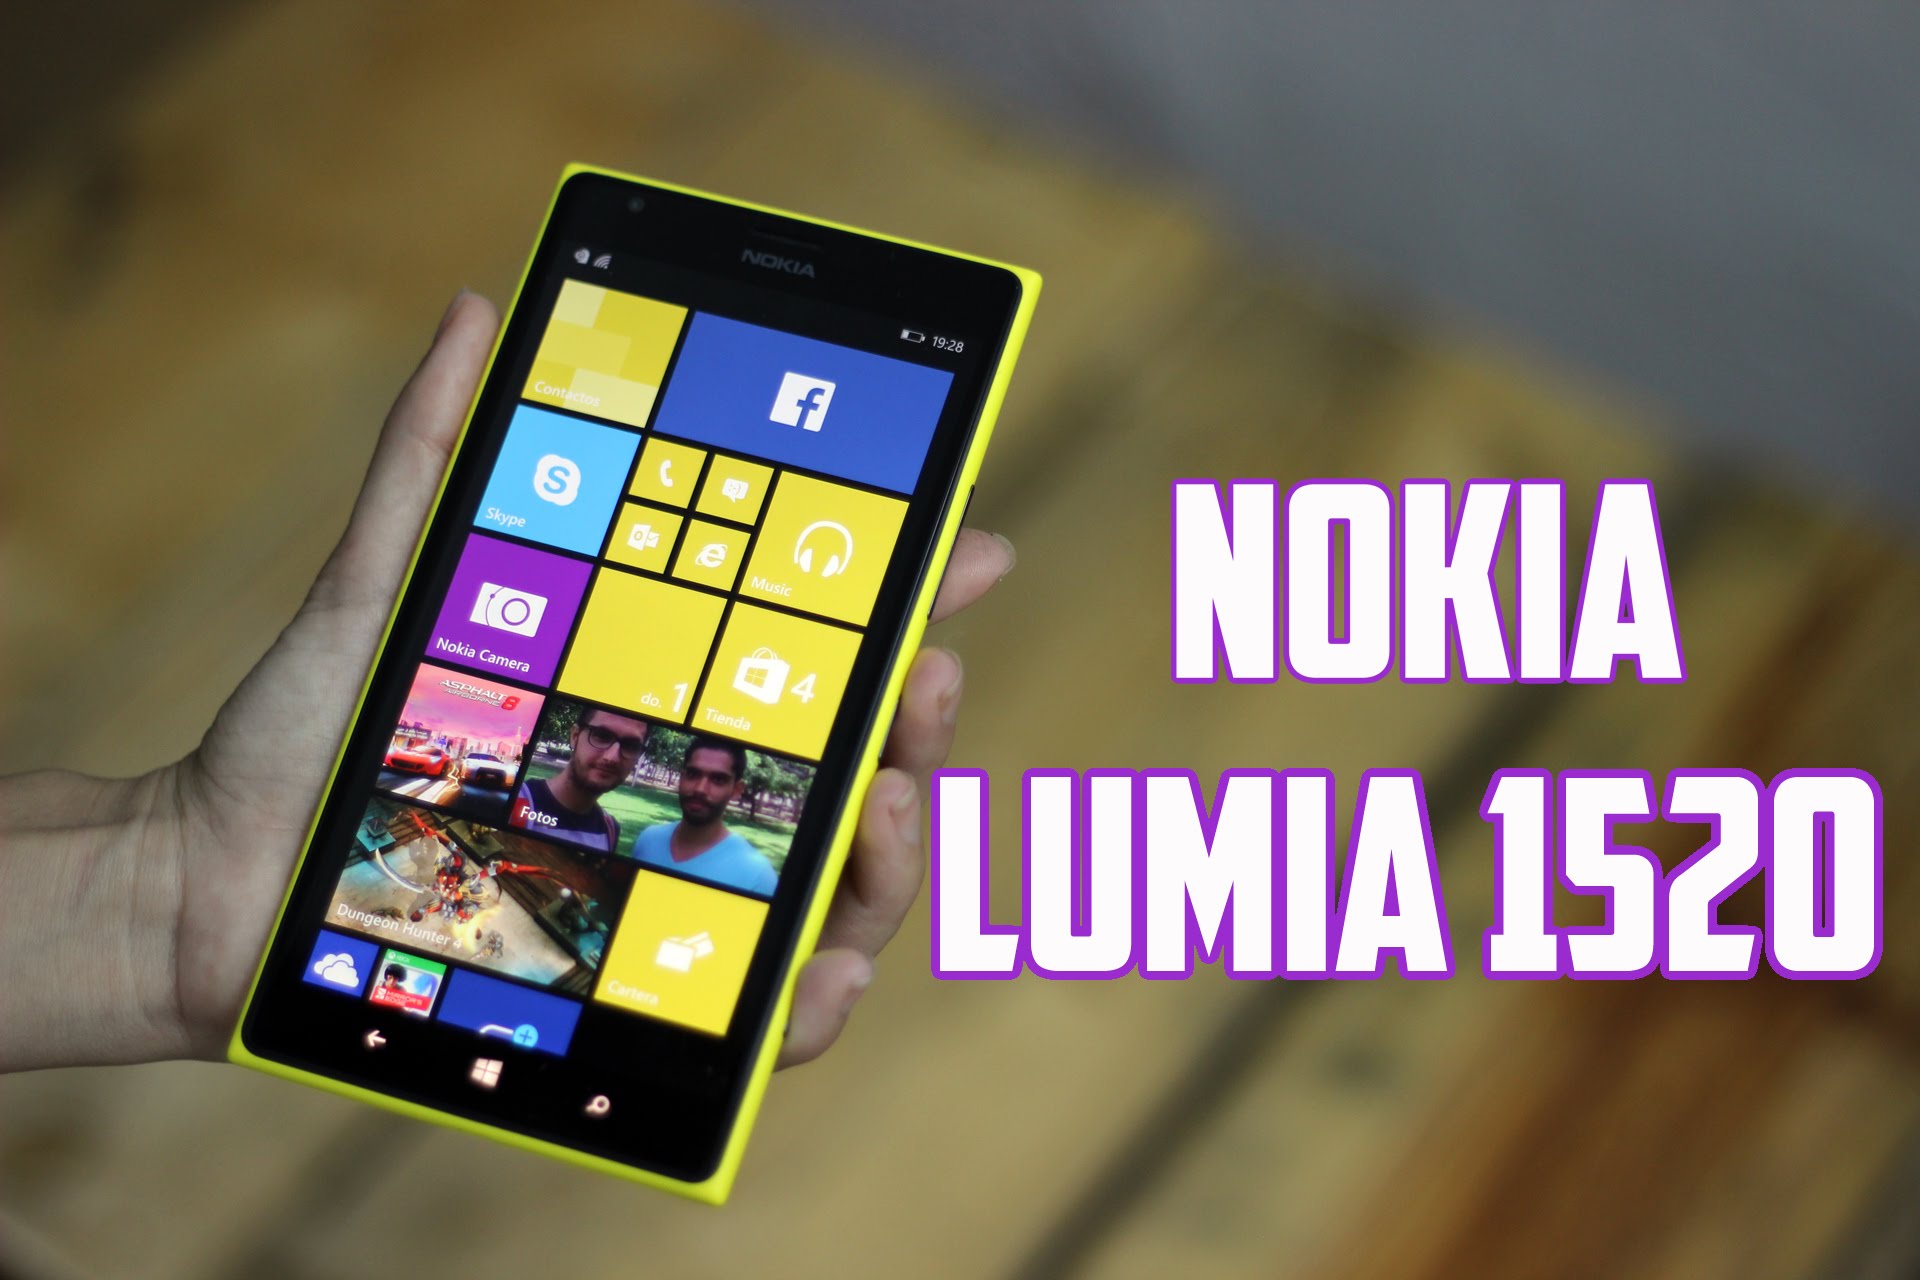 Thay mặt kính Lumia 1520